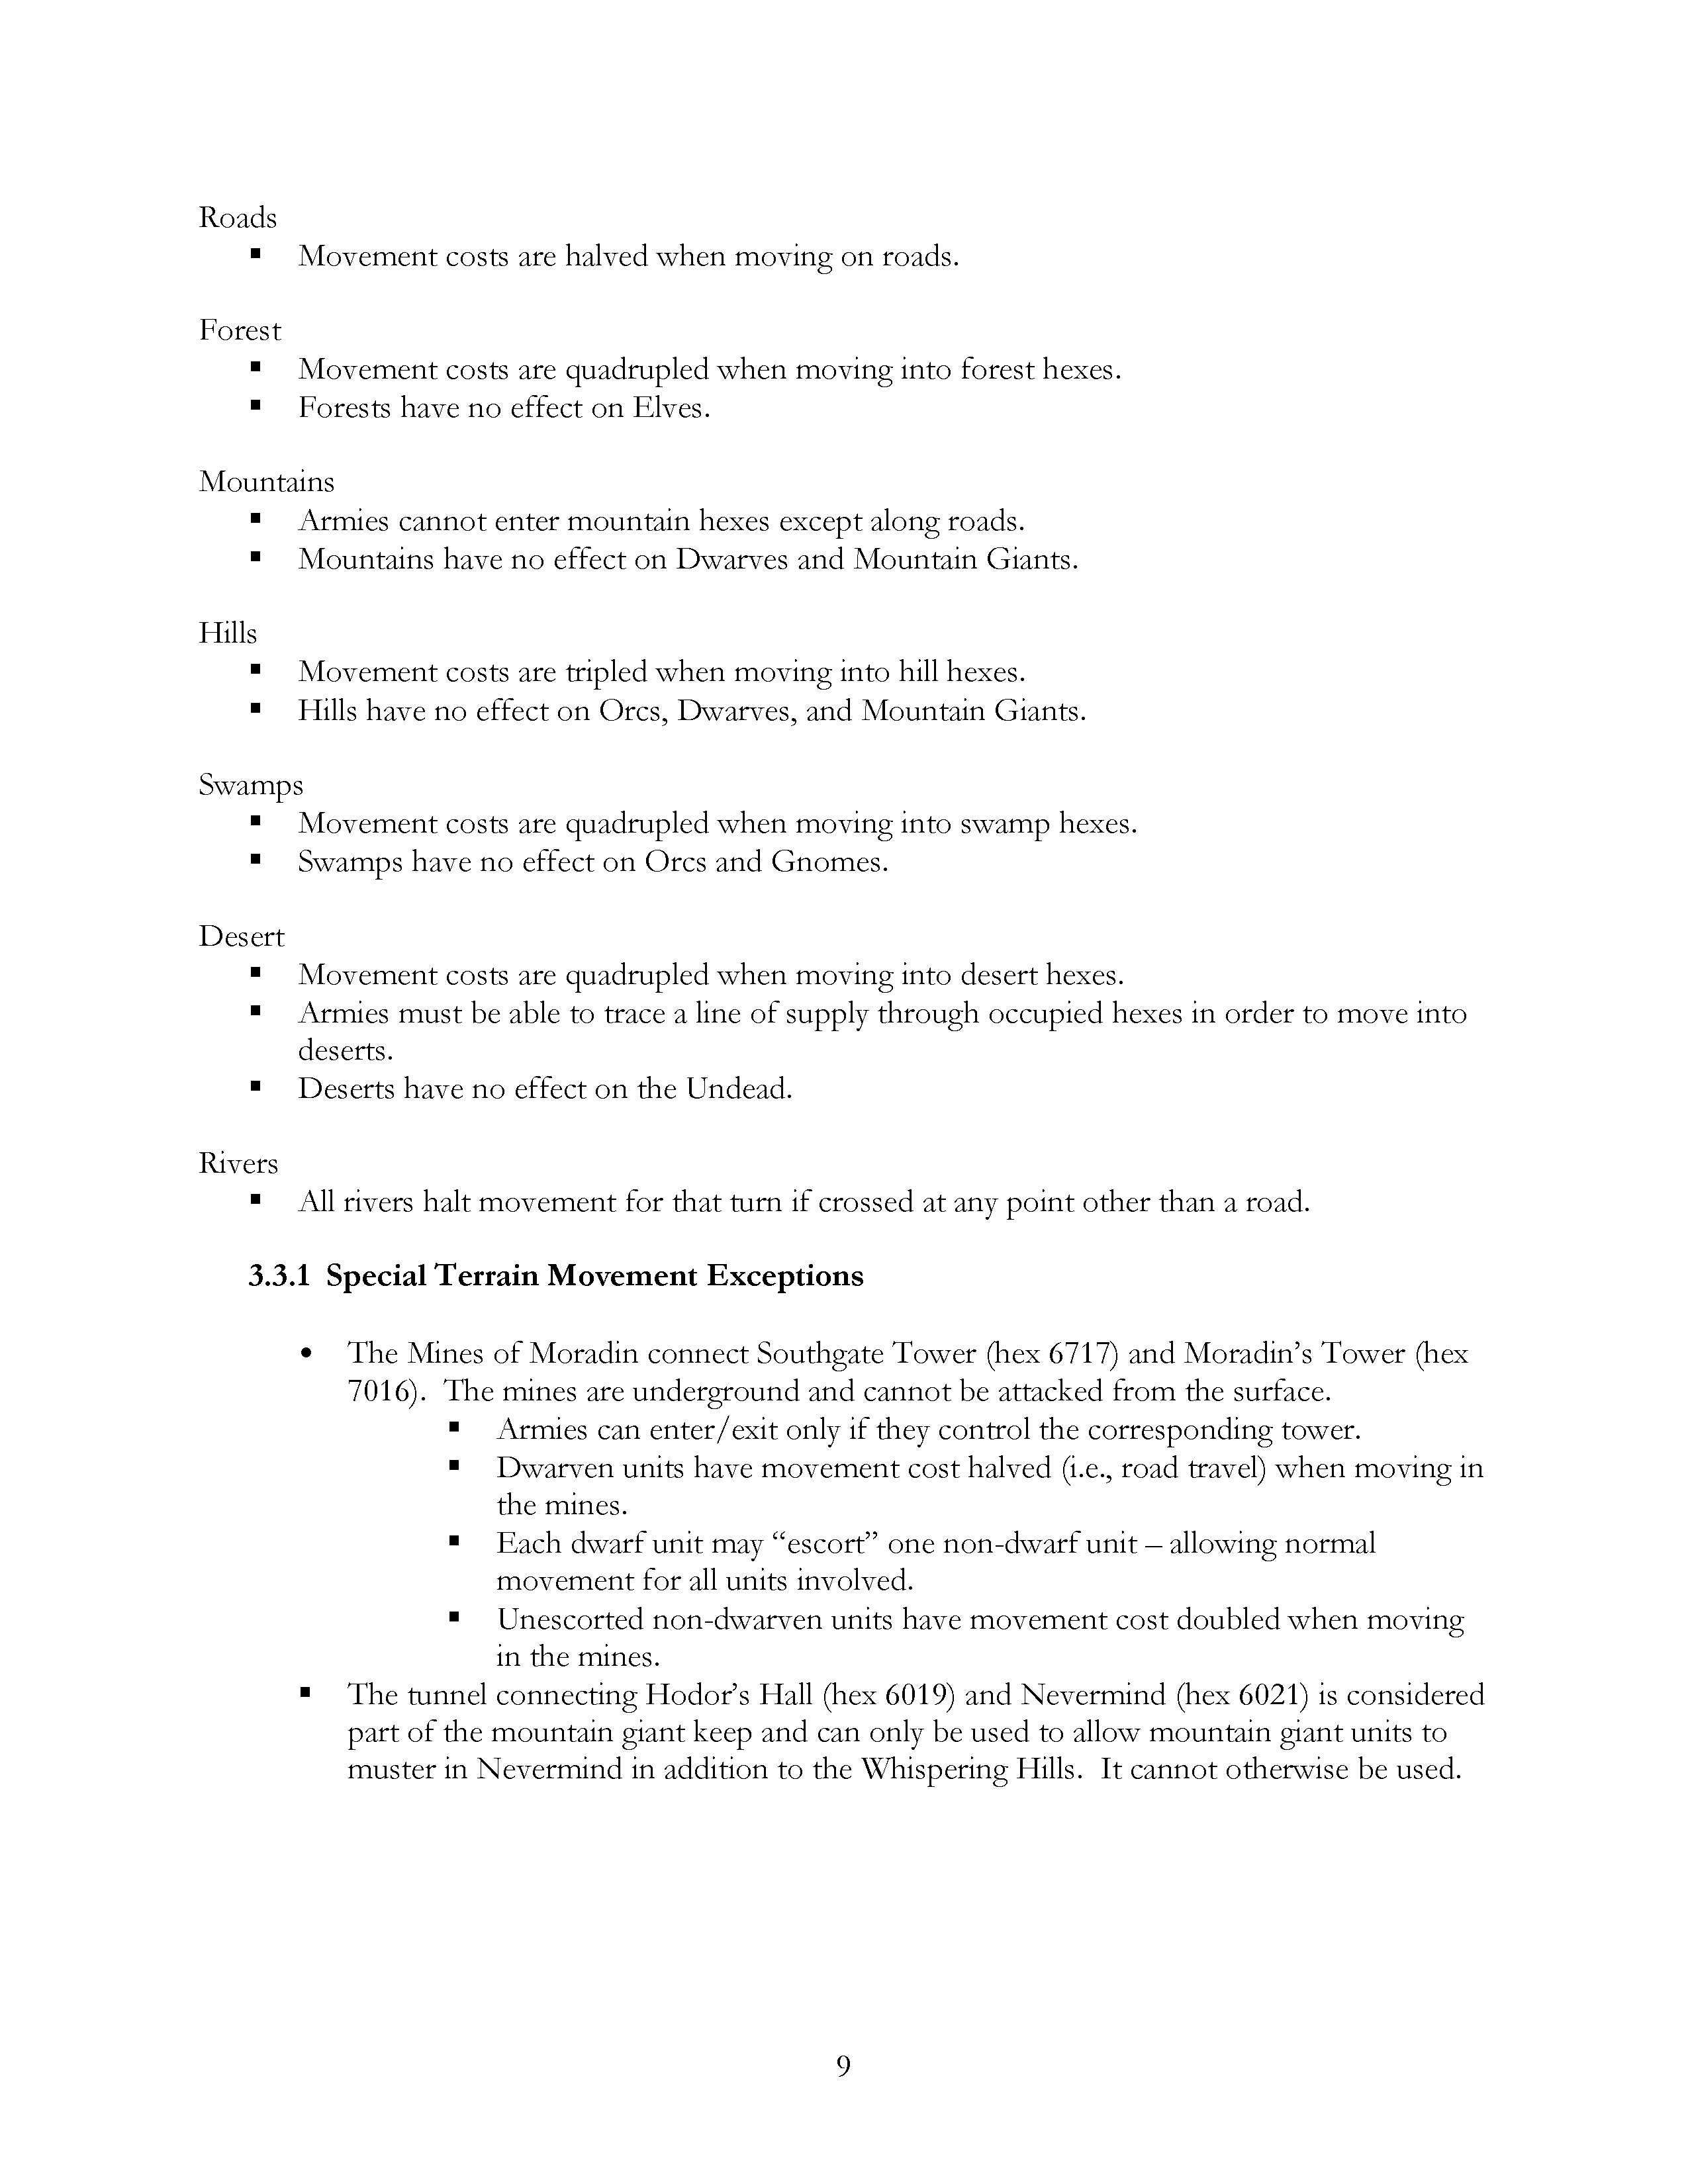 Witenagemot Rules 12d Page 10.jpg